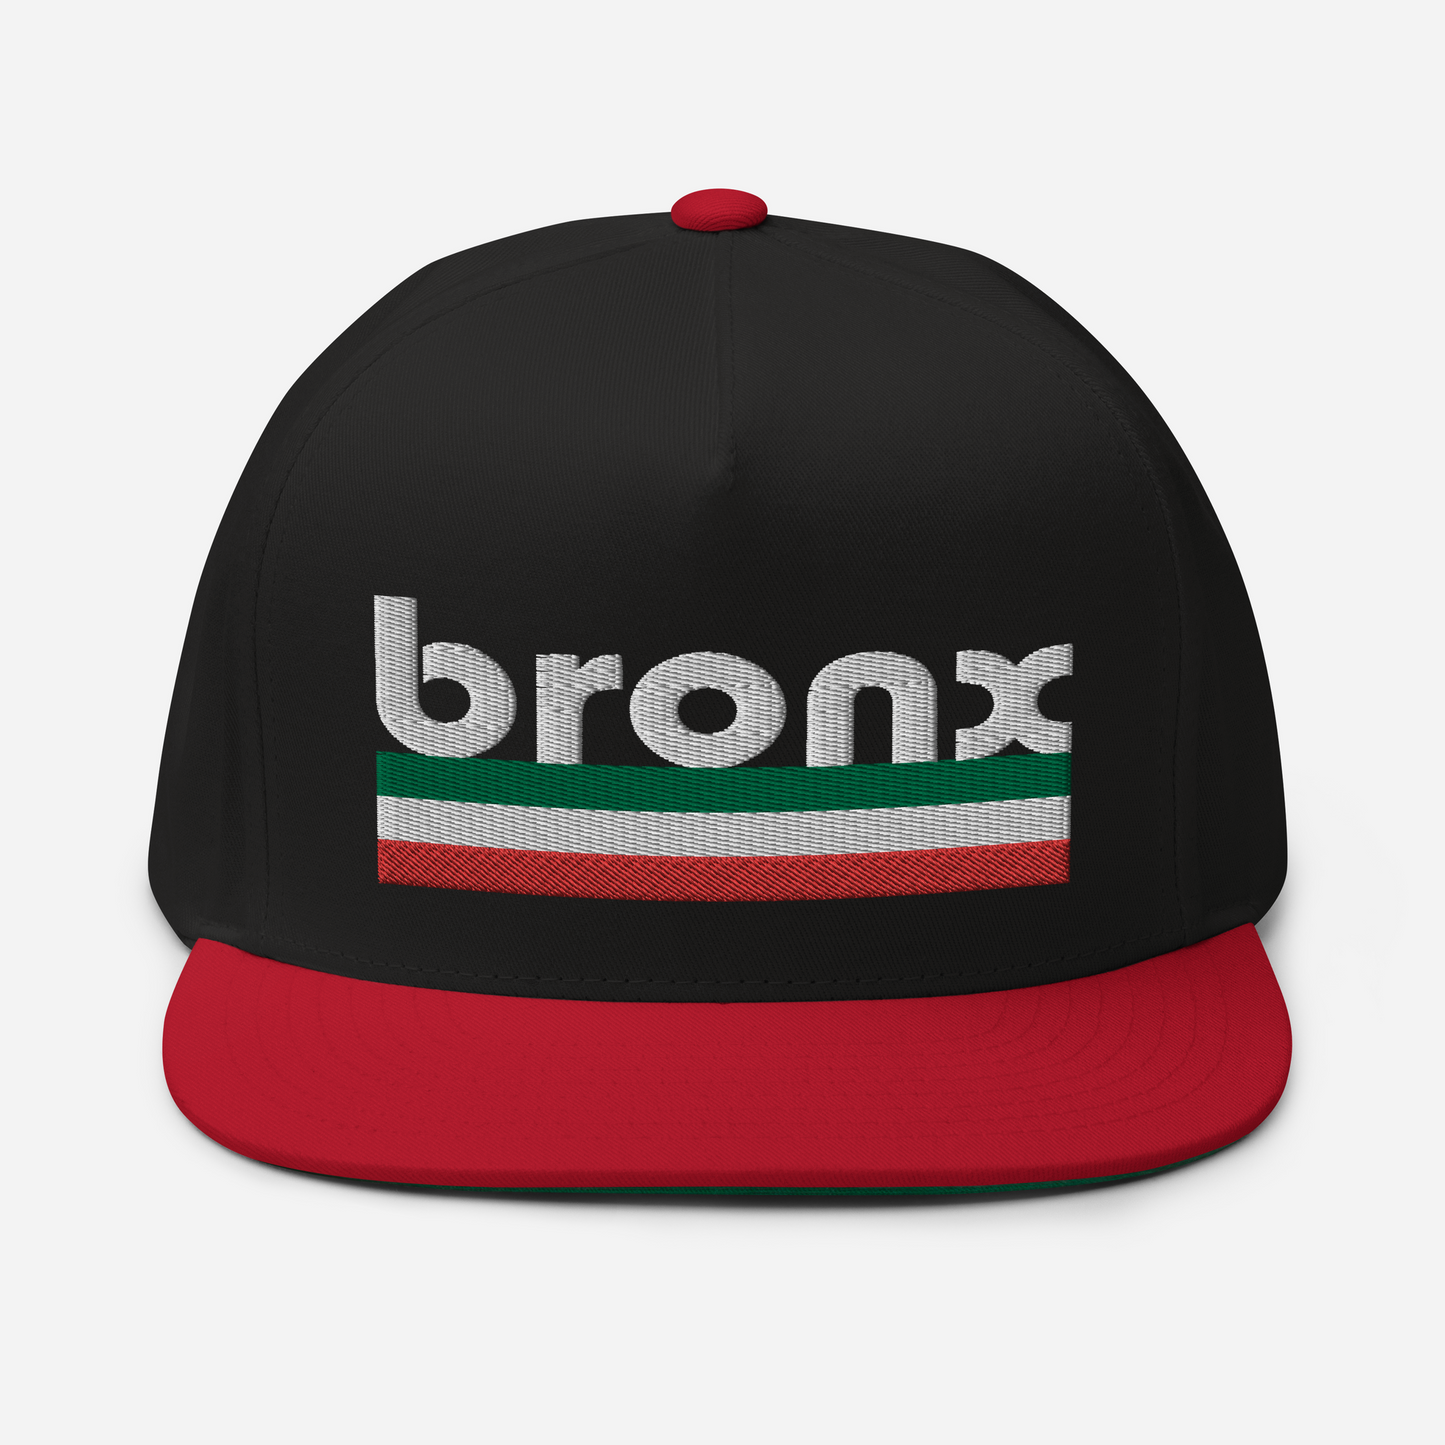 Bronx Italian Snapback Hat - Stylish Urban Headwear with Italian Flair